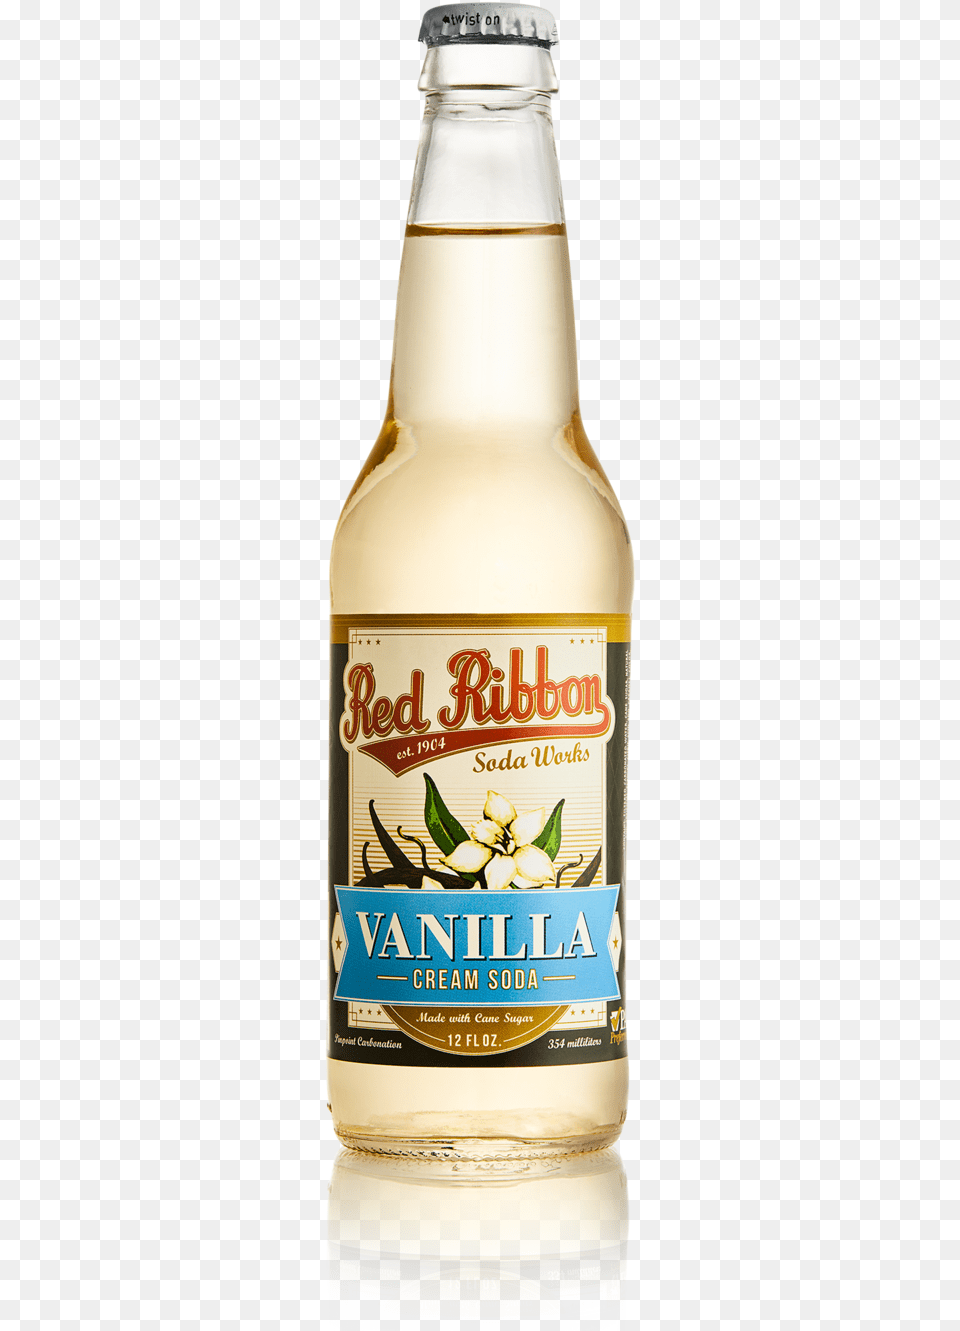 Vanilla Cream Soda Glass Bottle, Alcohol, Beer, Beverage, Beer Bottle Free Png